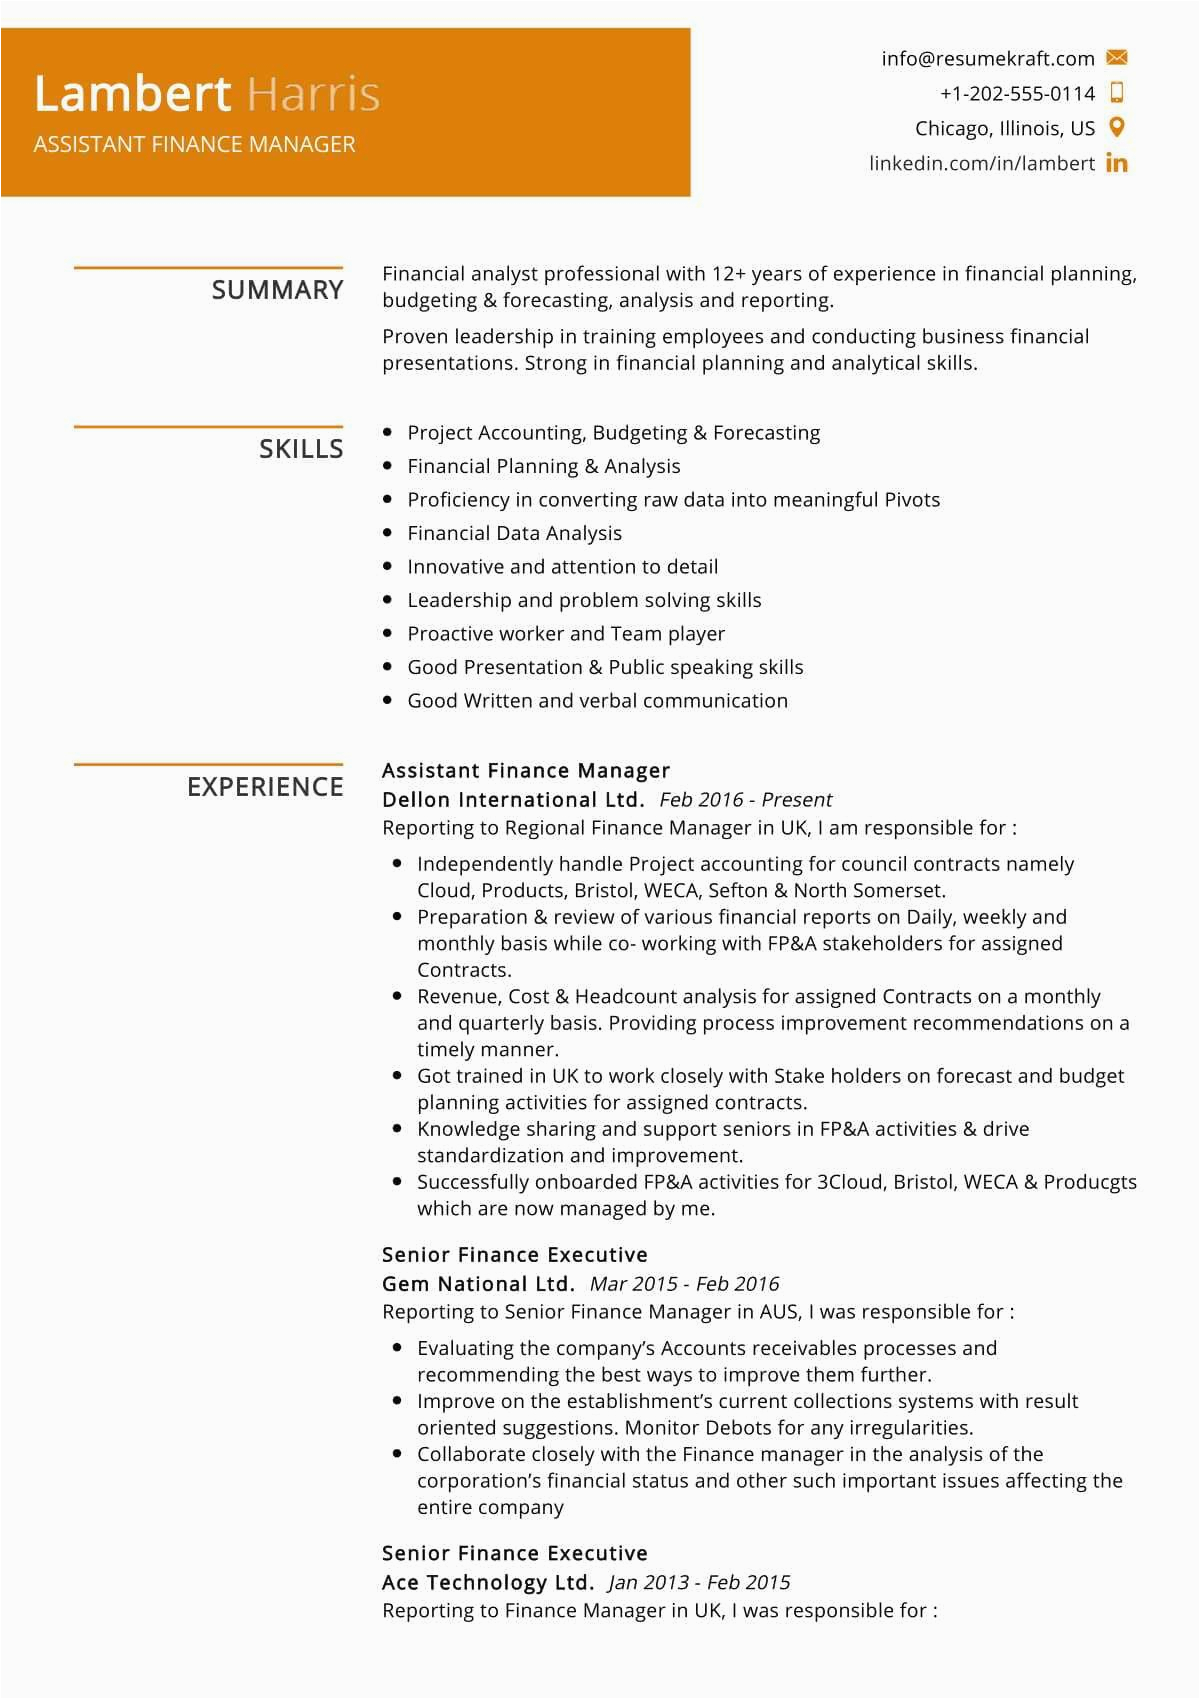 Sample Resume for assistant Manager Finance assistant Finance Manager Resume Example 2022